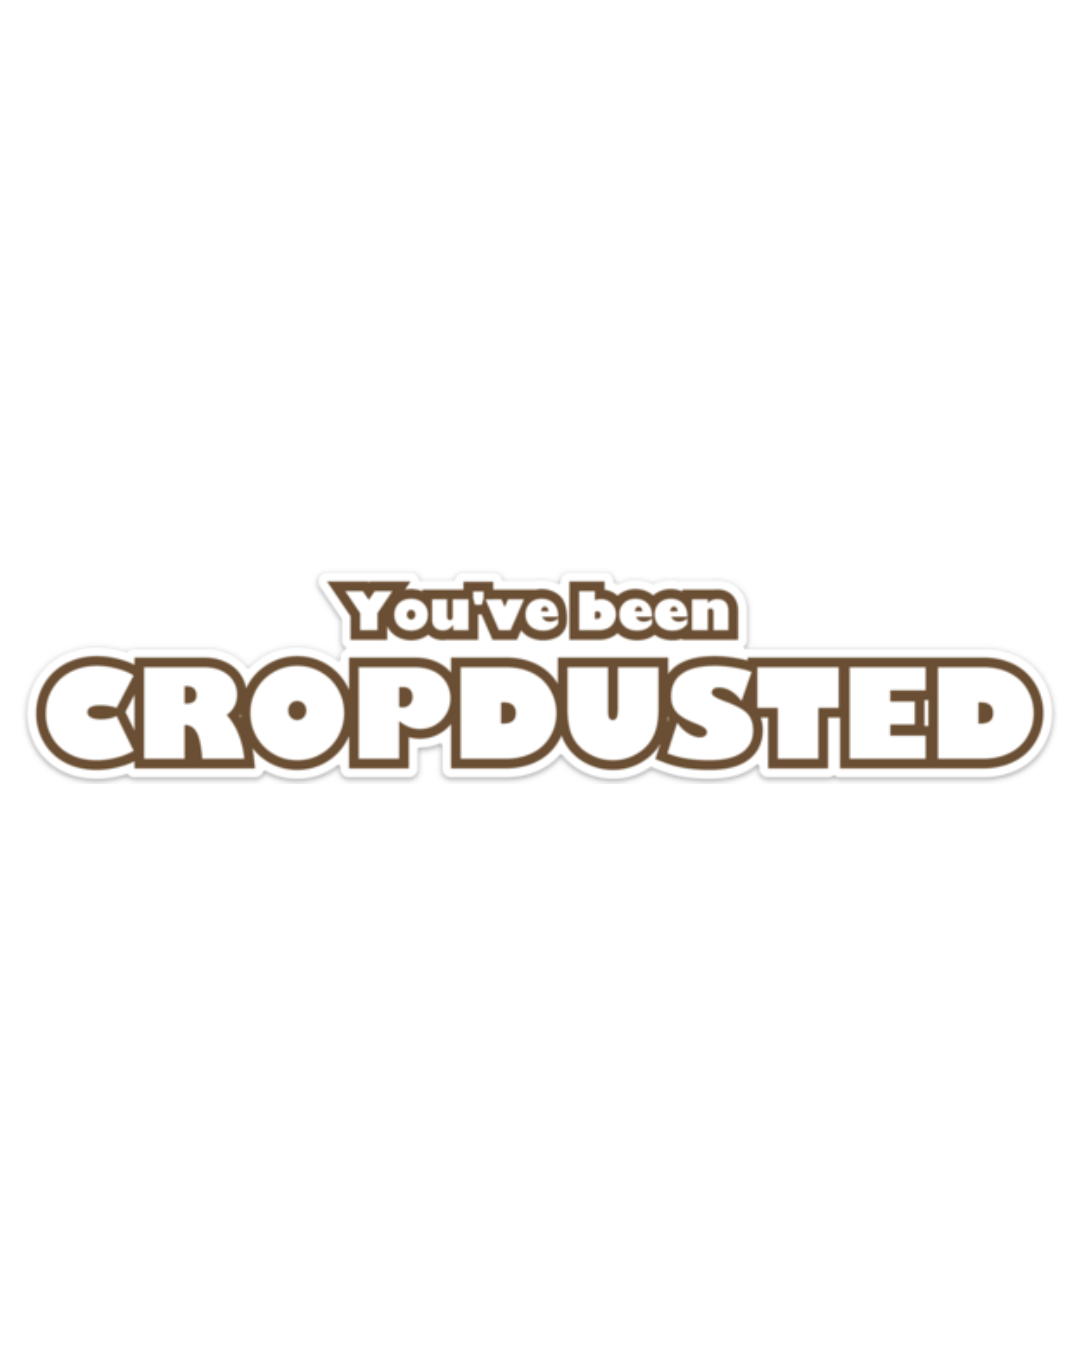 Cropdusted Bumper Sticker